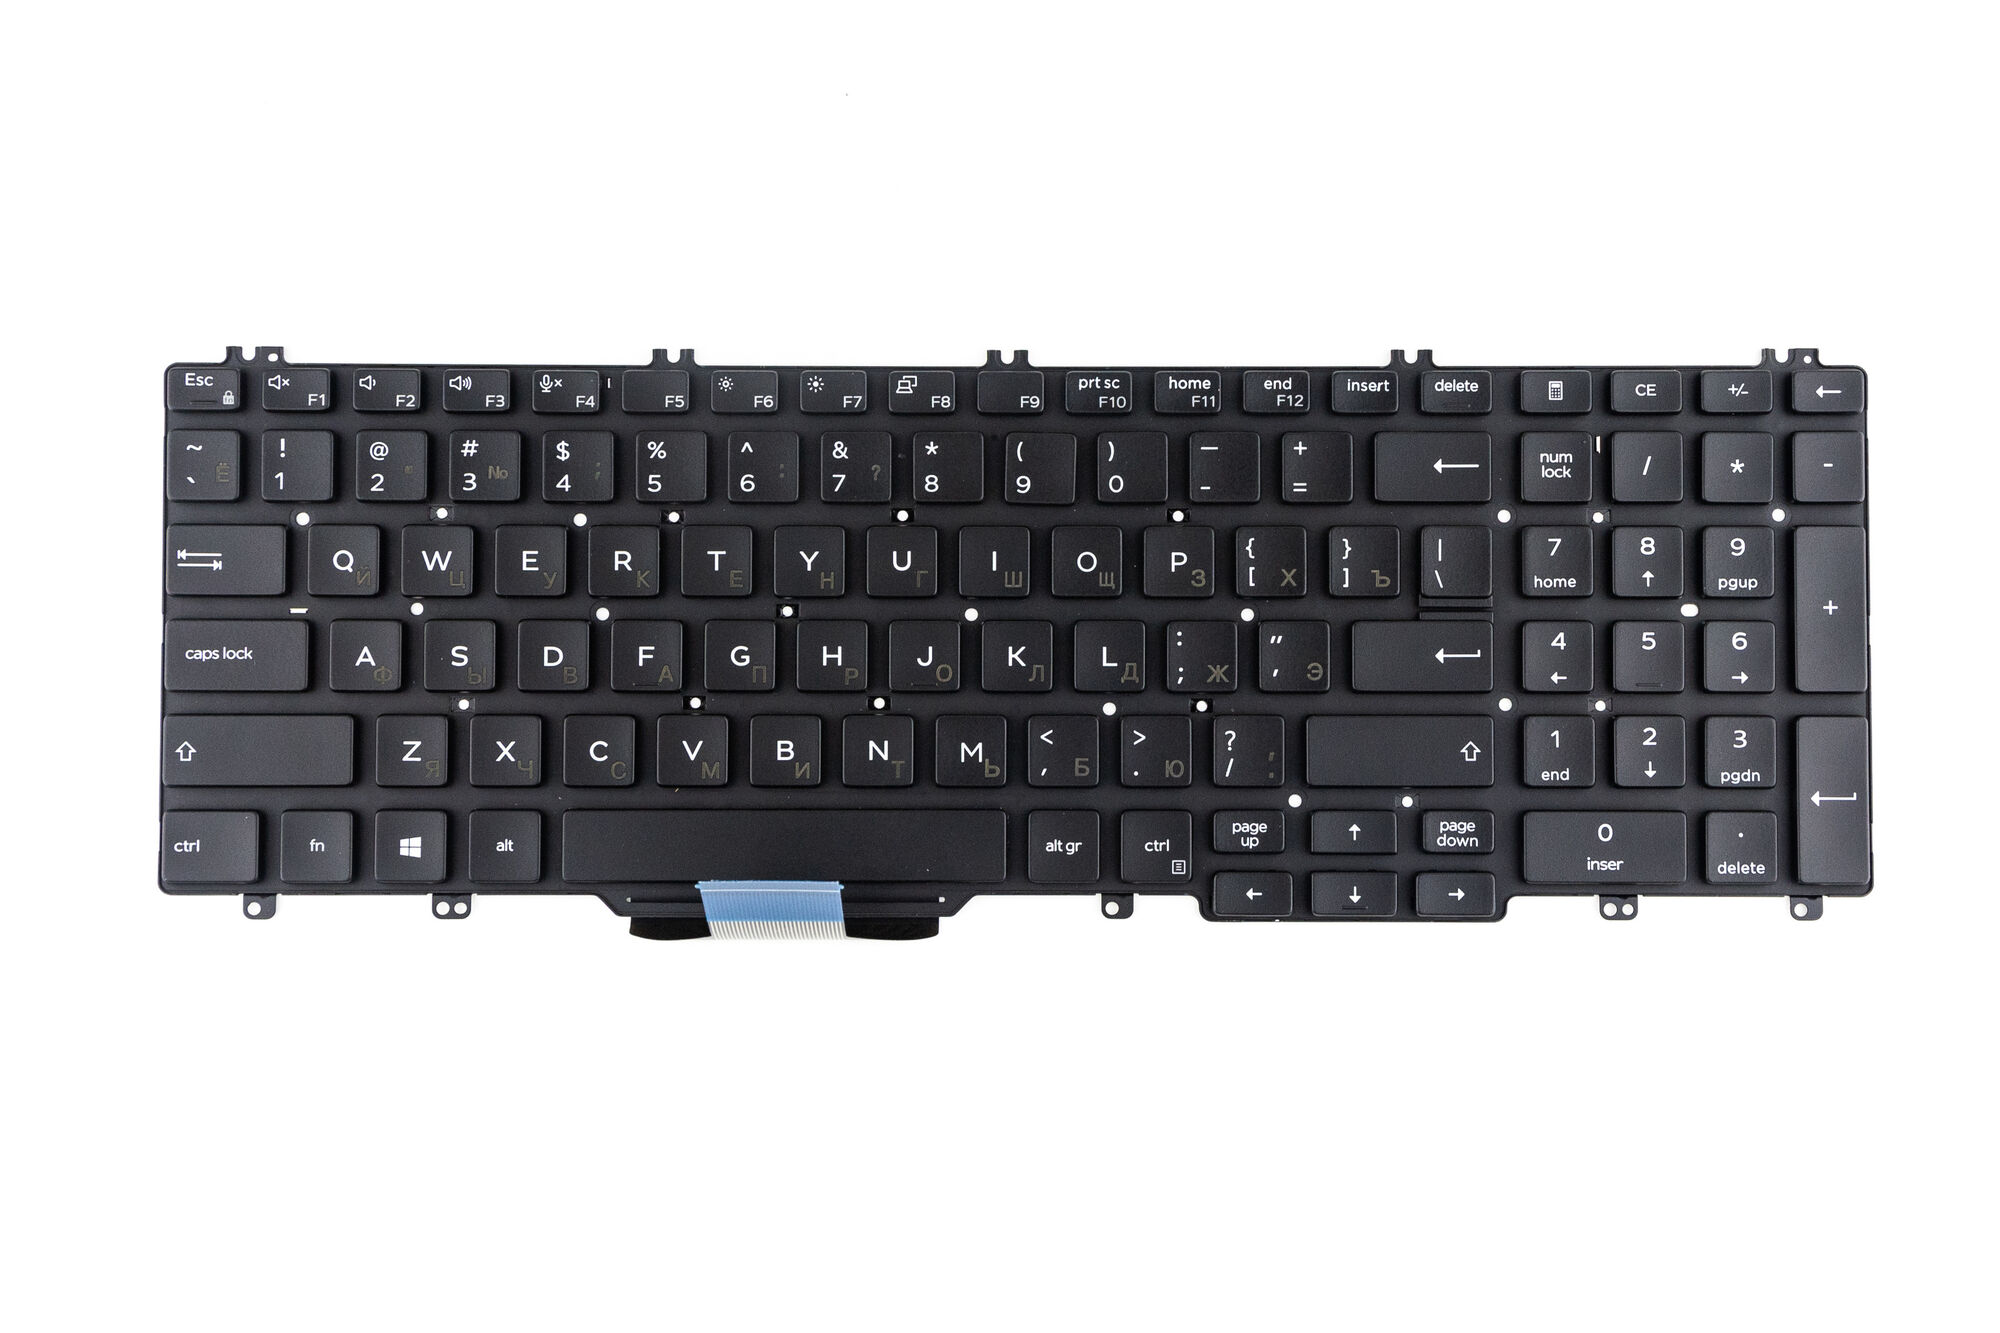 Клавиатура для ноутбука Dell 5501 p/n: PK132FA3A10 SG-97600-X3A 0DTJ5G